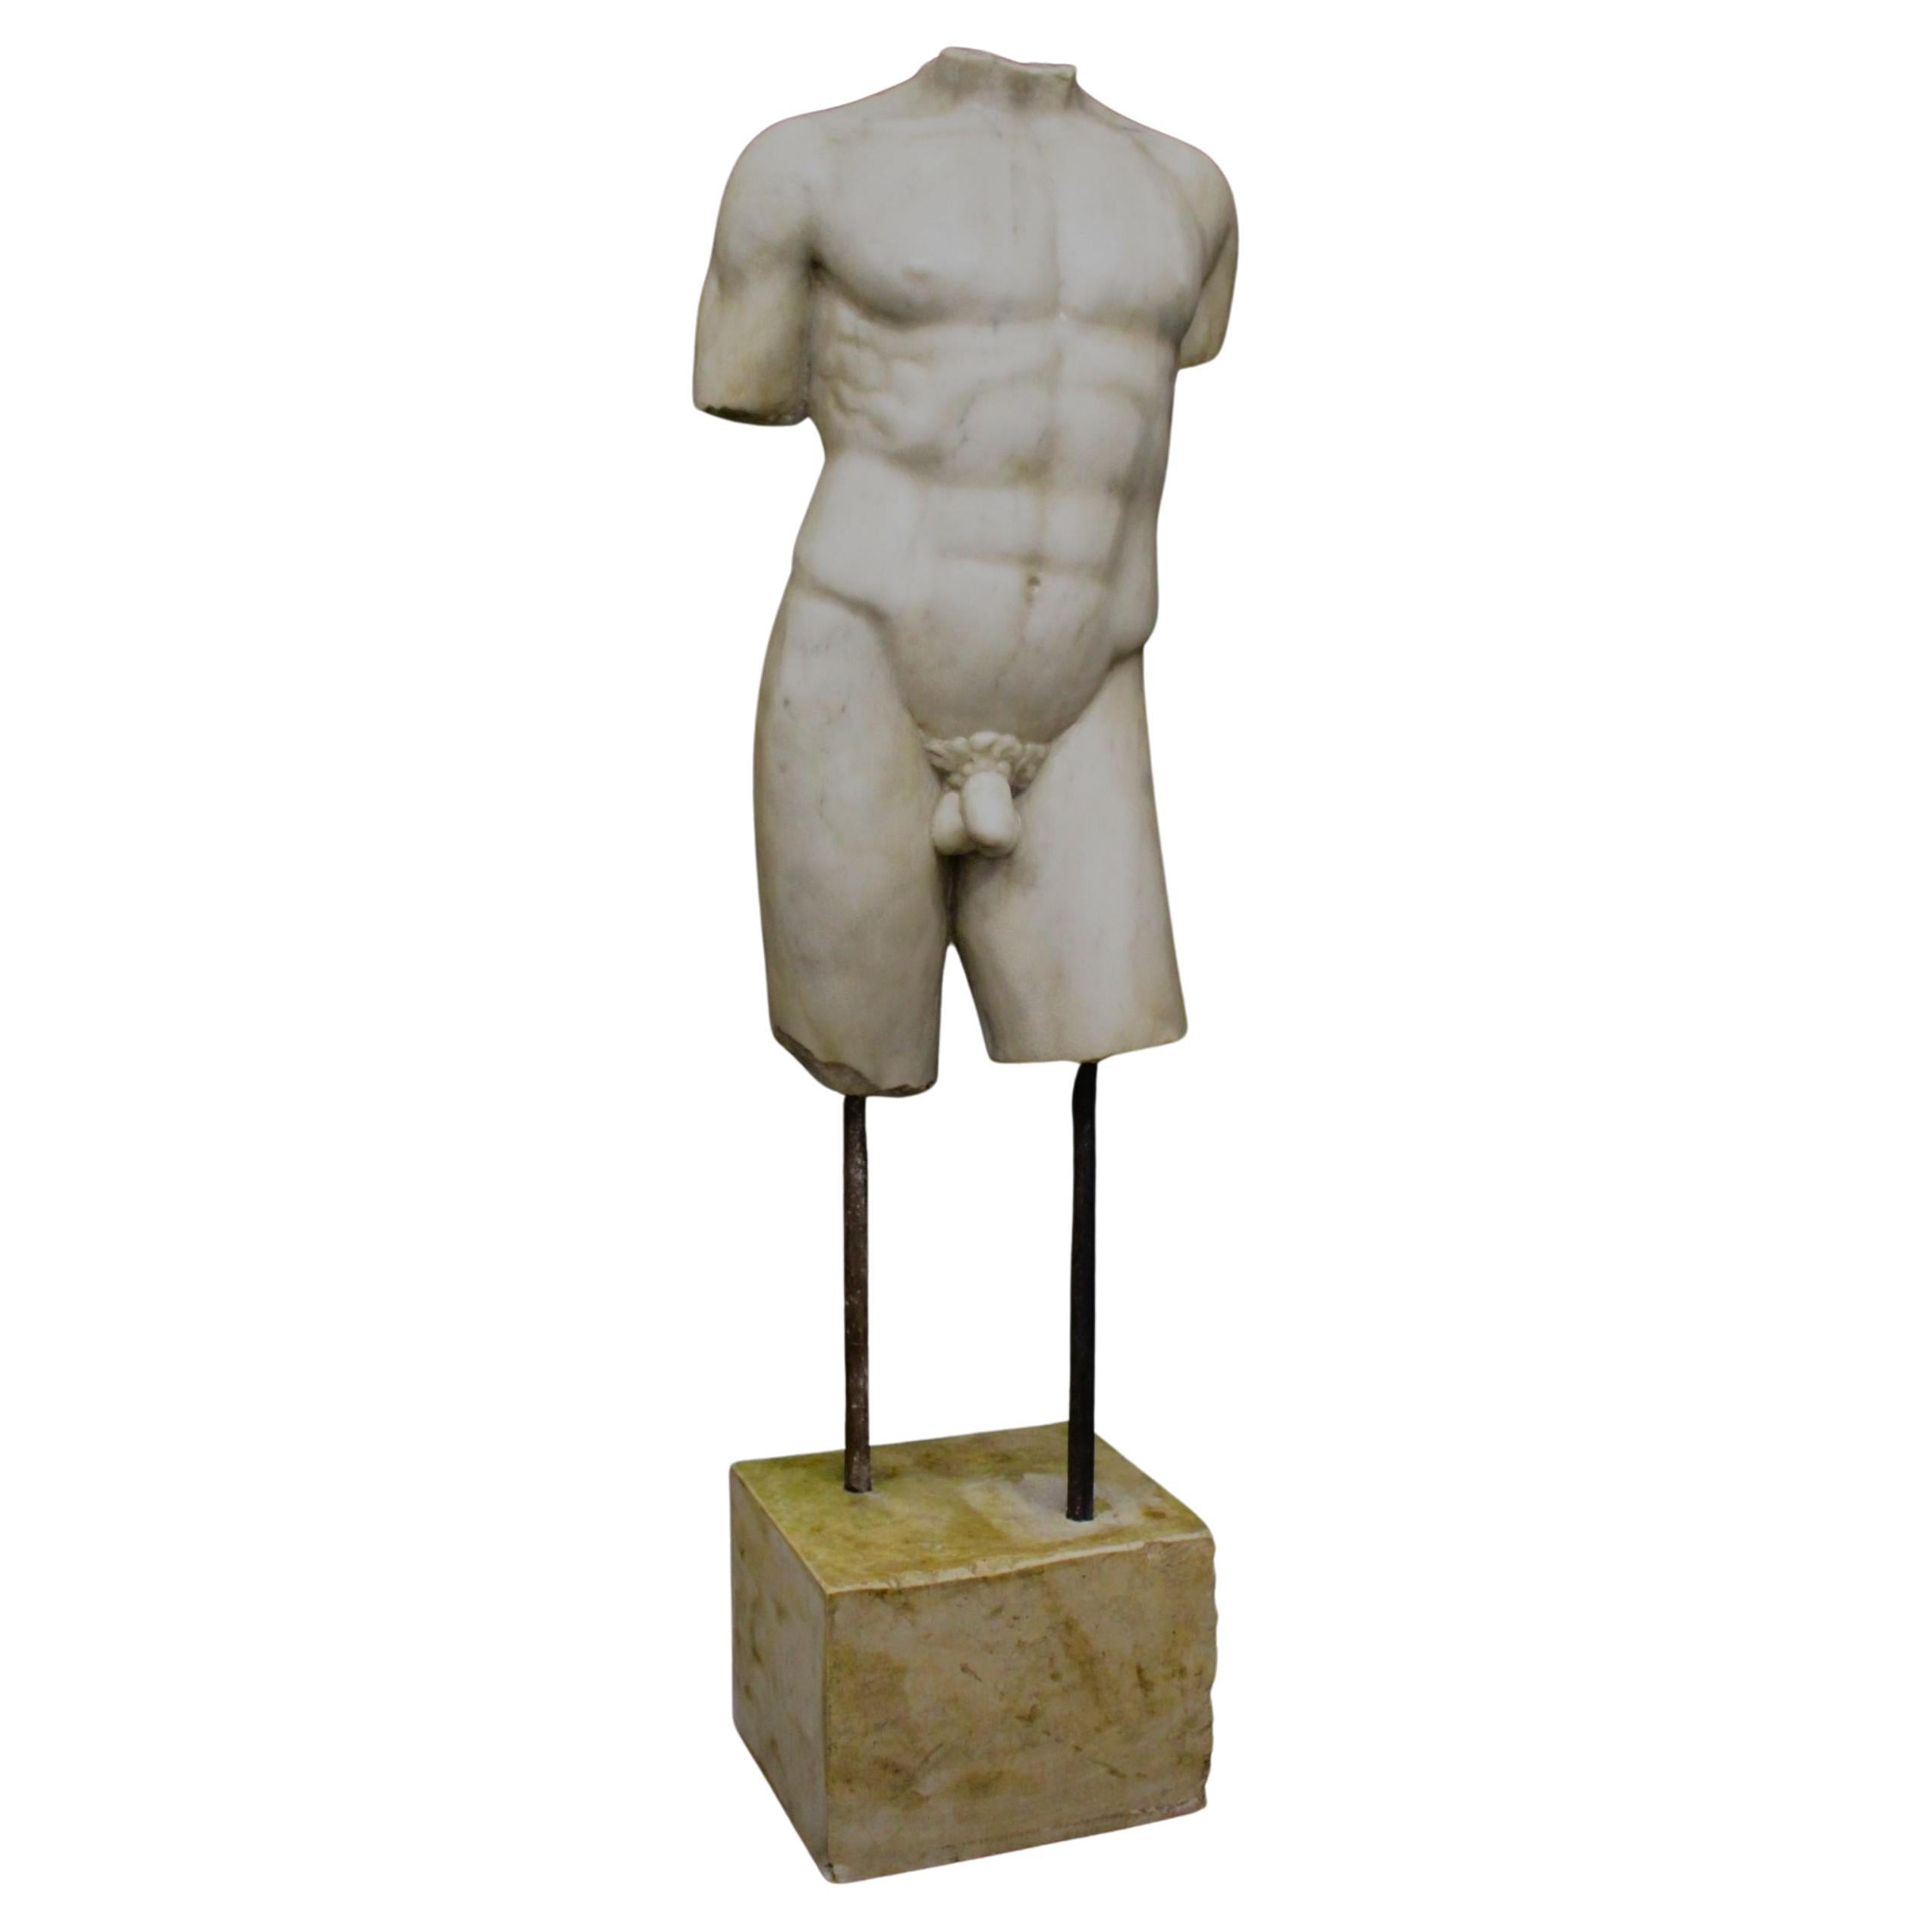 Torse en marbre, hauteur123 cm, buste en marbre de Carrare, sculpture en marbre